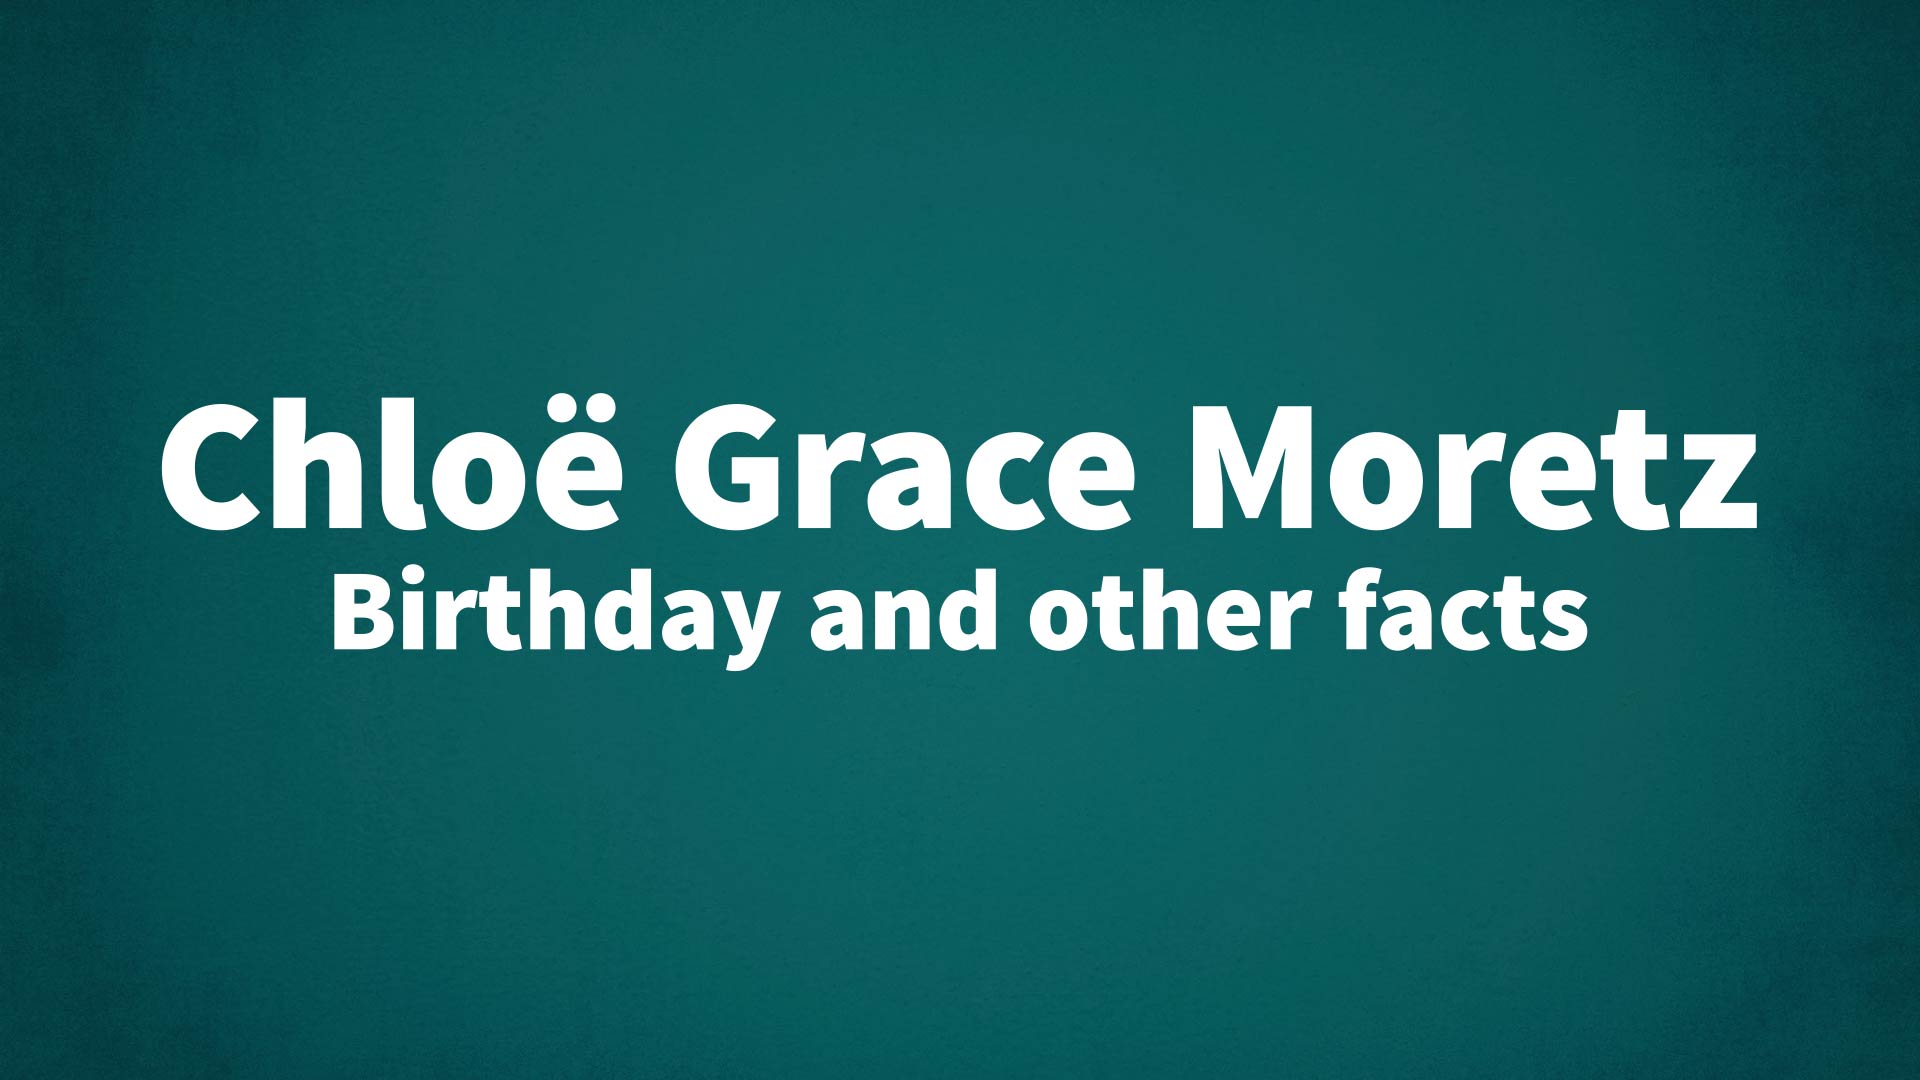 Happy B-day Chloë Grace Moretz!